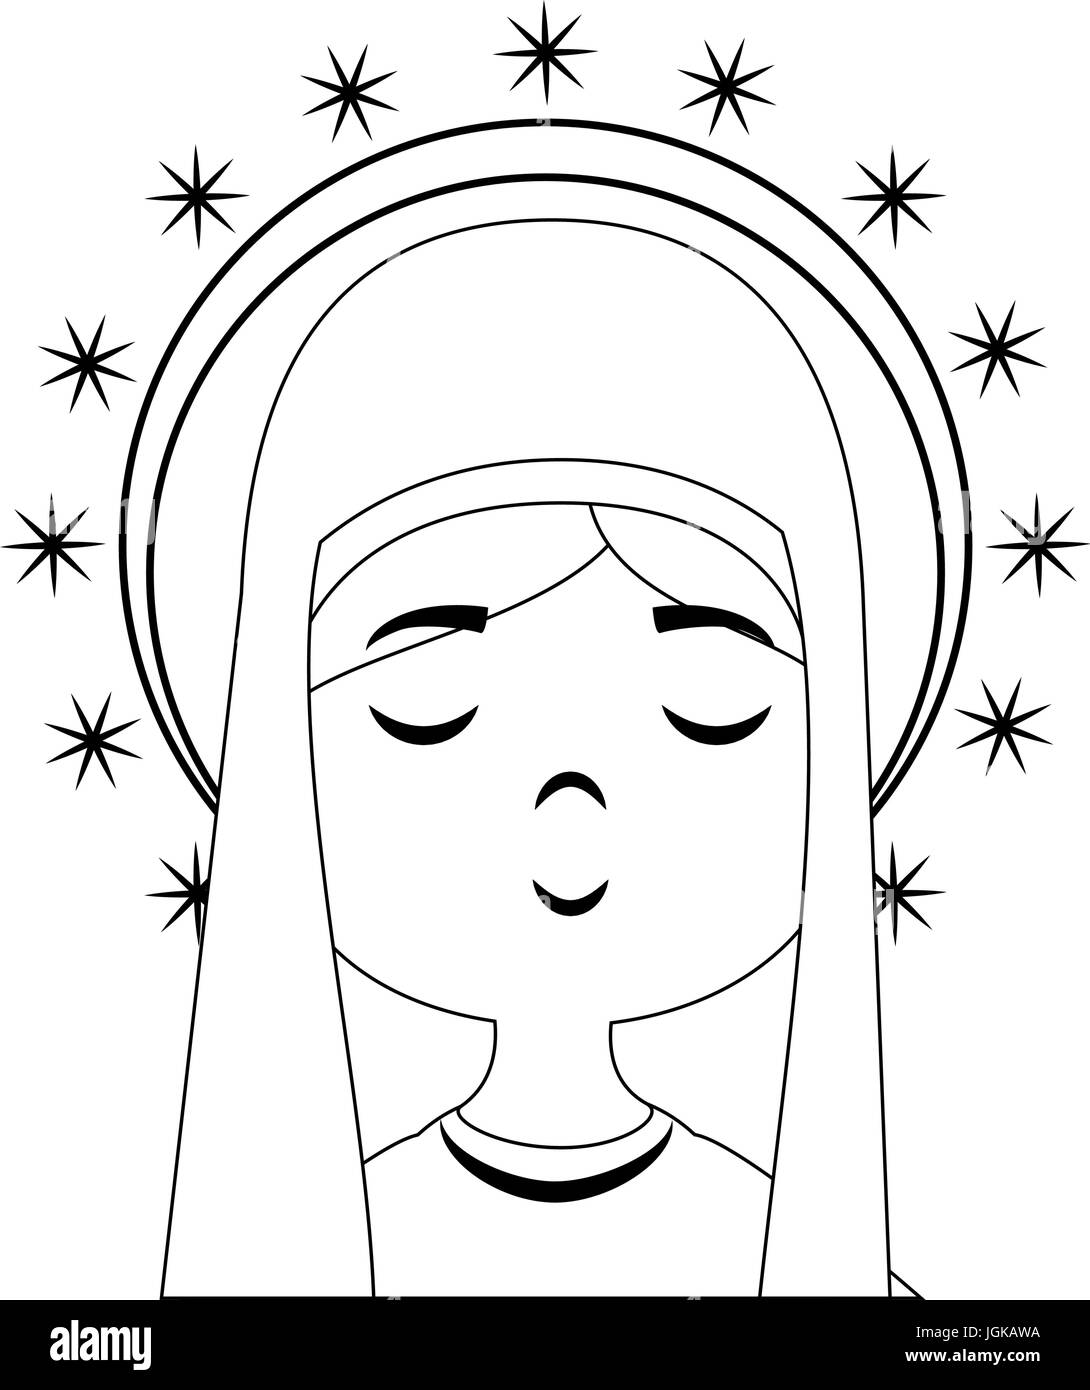 Virgin mary cartoon icon vector illustration graphic design Stock ...